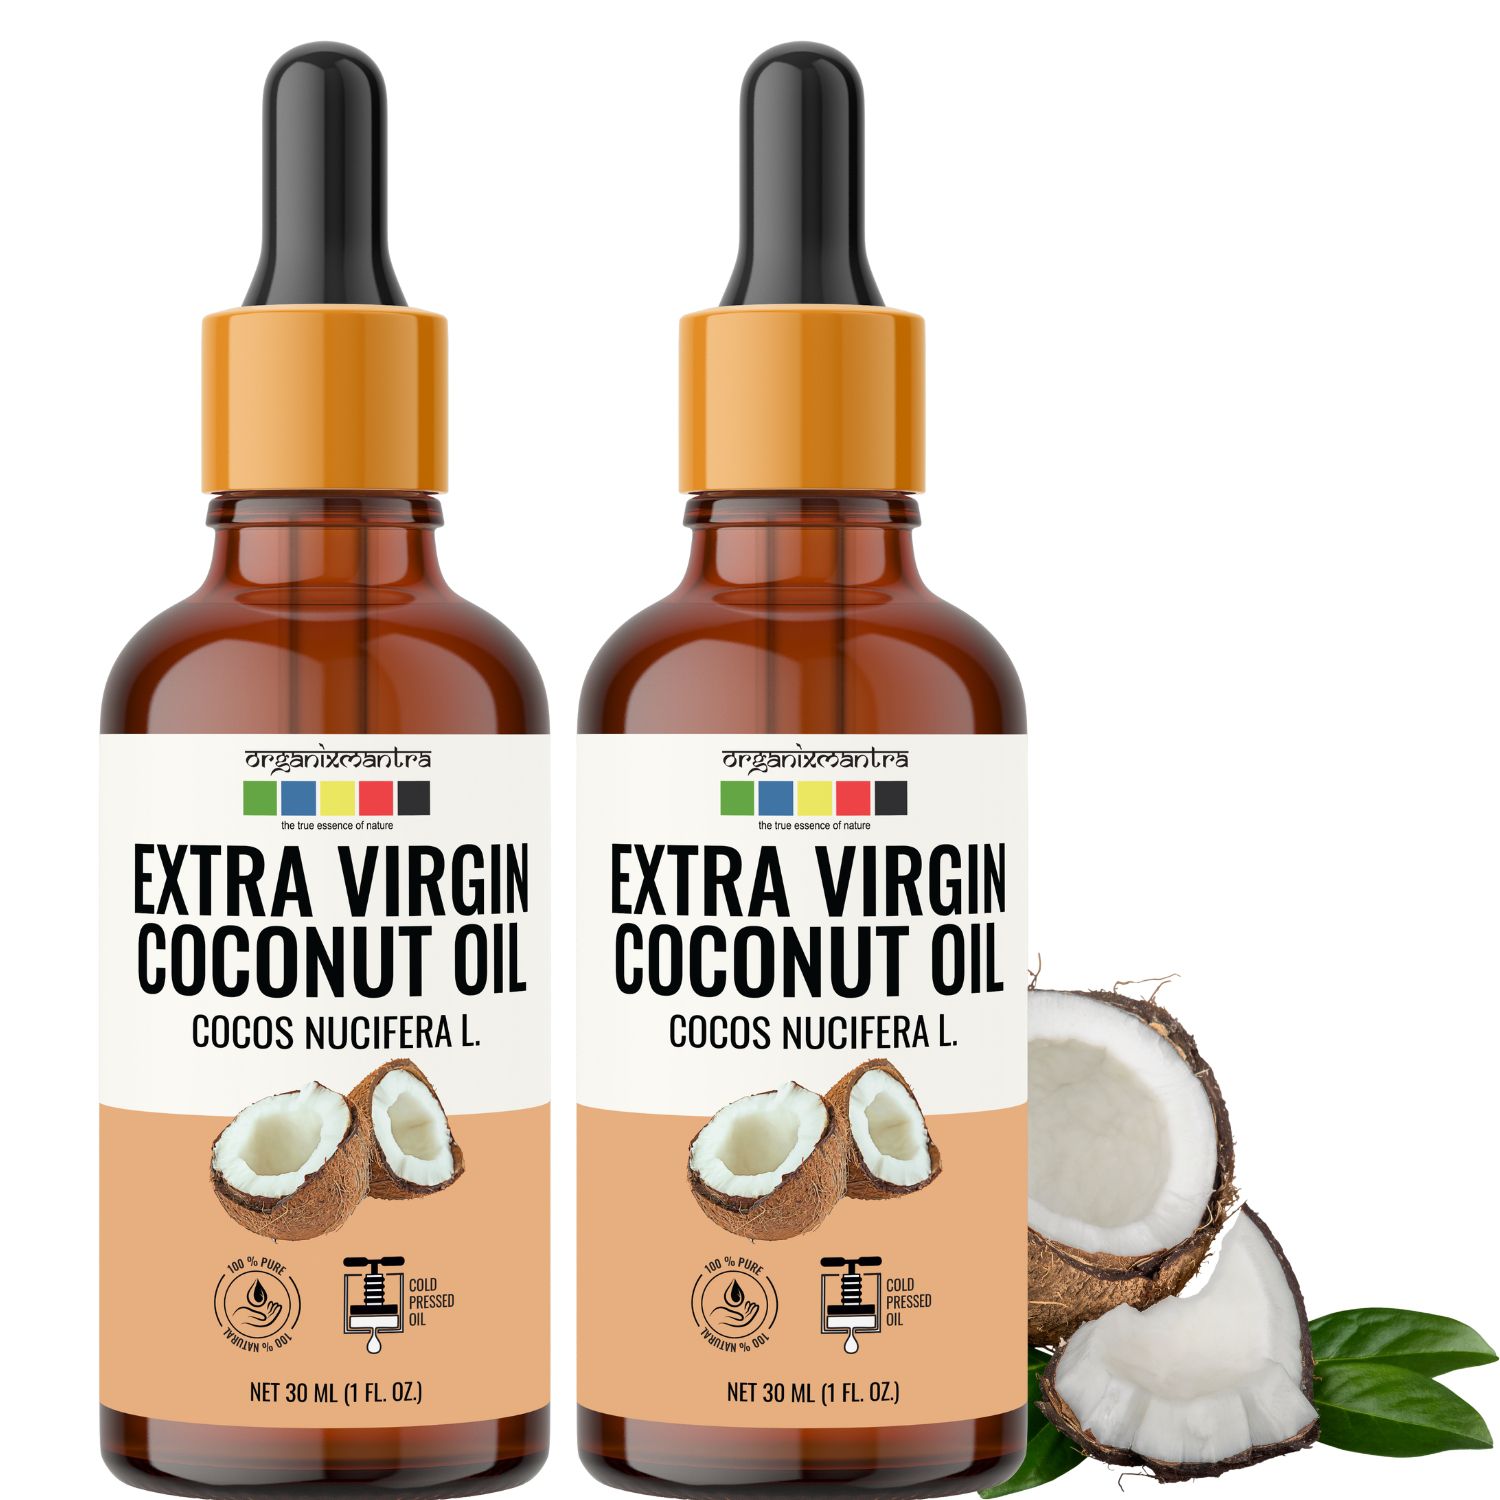     			Organix Mantra Extra Virgin Coconut Oil, Cold Pressed Organic Oil, 30ML x 2